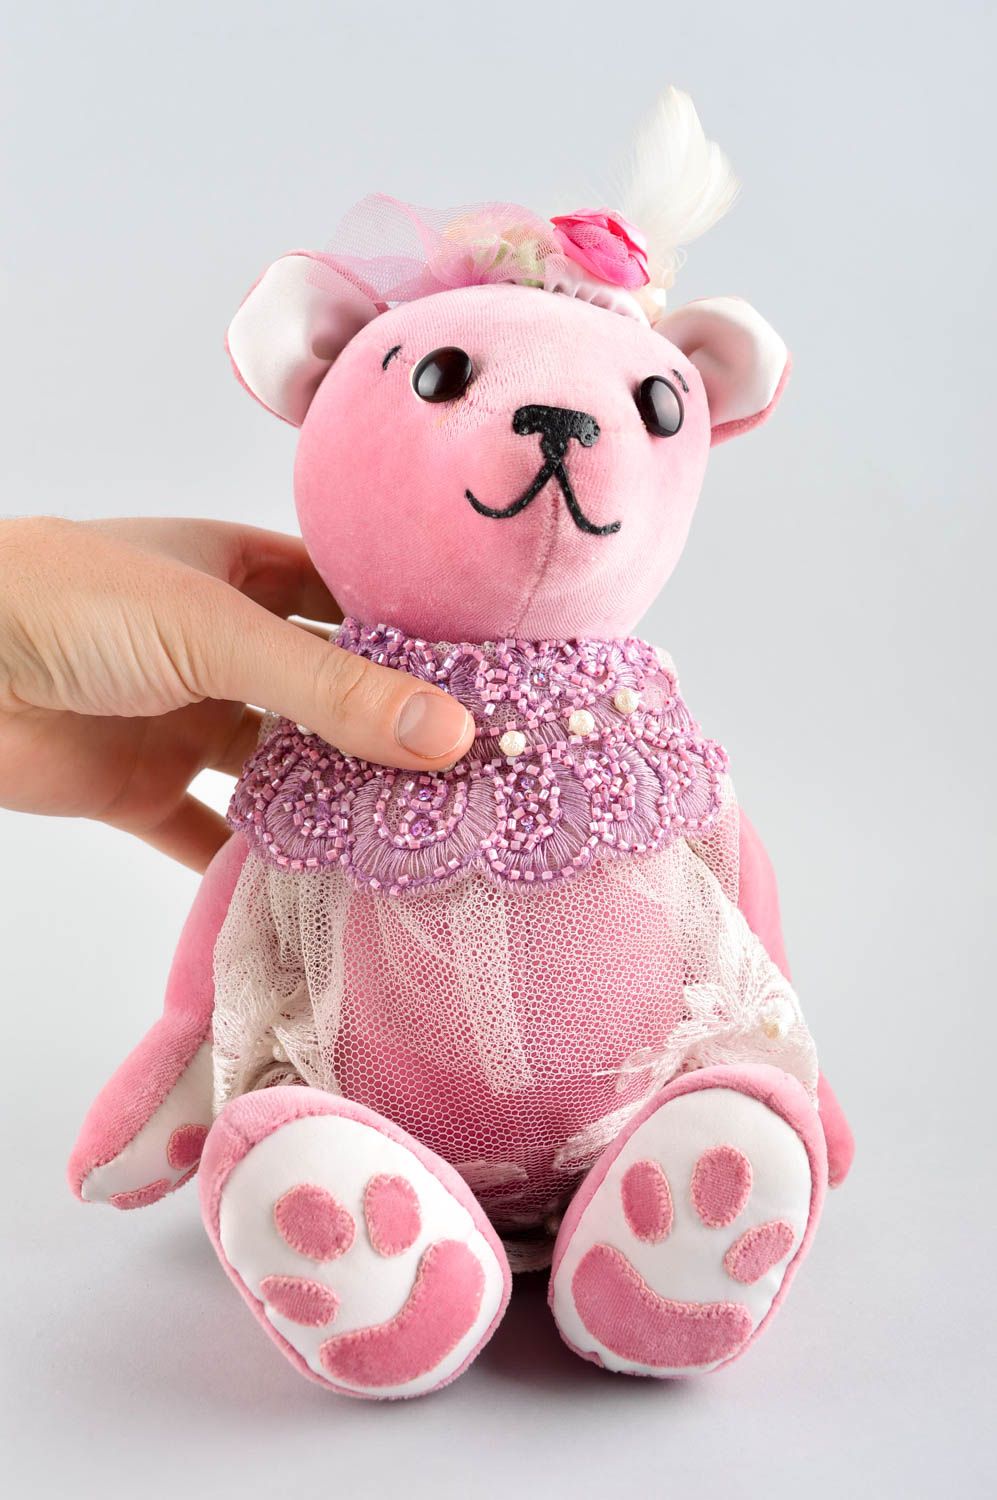 Handmade designer toy bear toy stuffed toys for children nursery decor photo 5